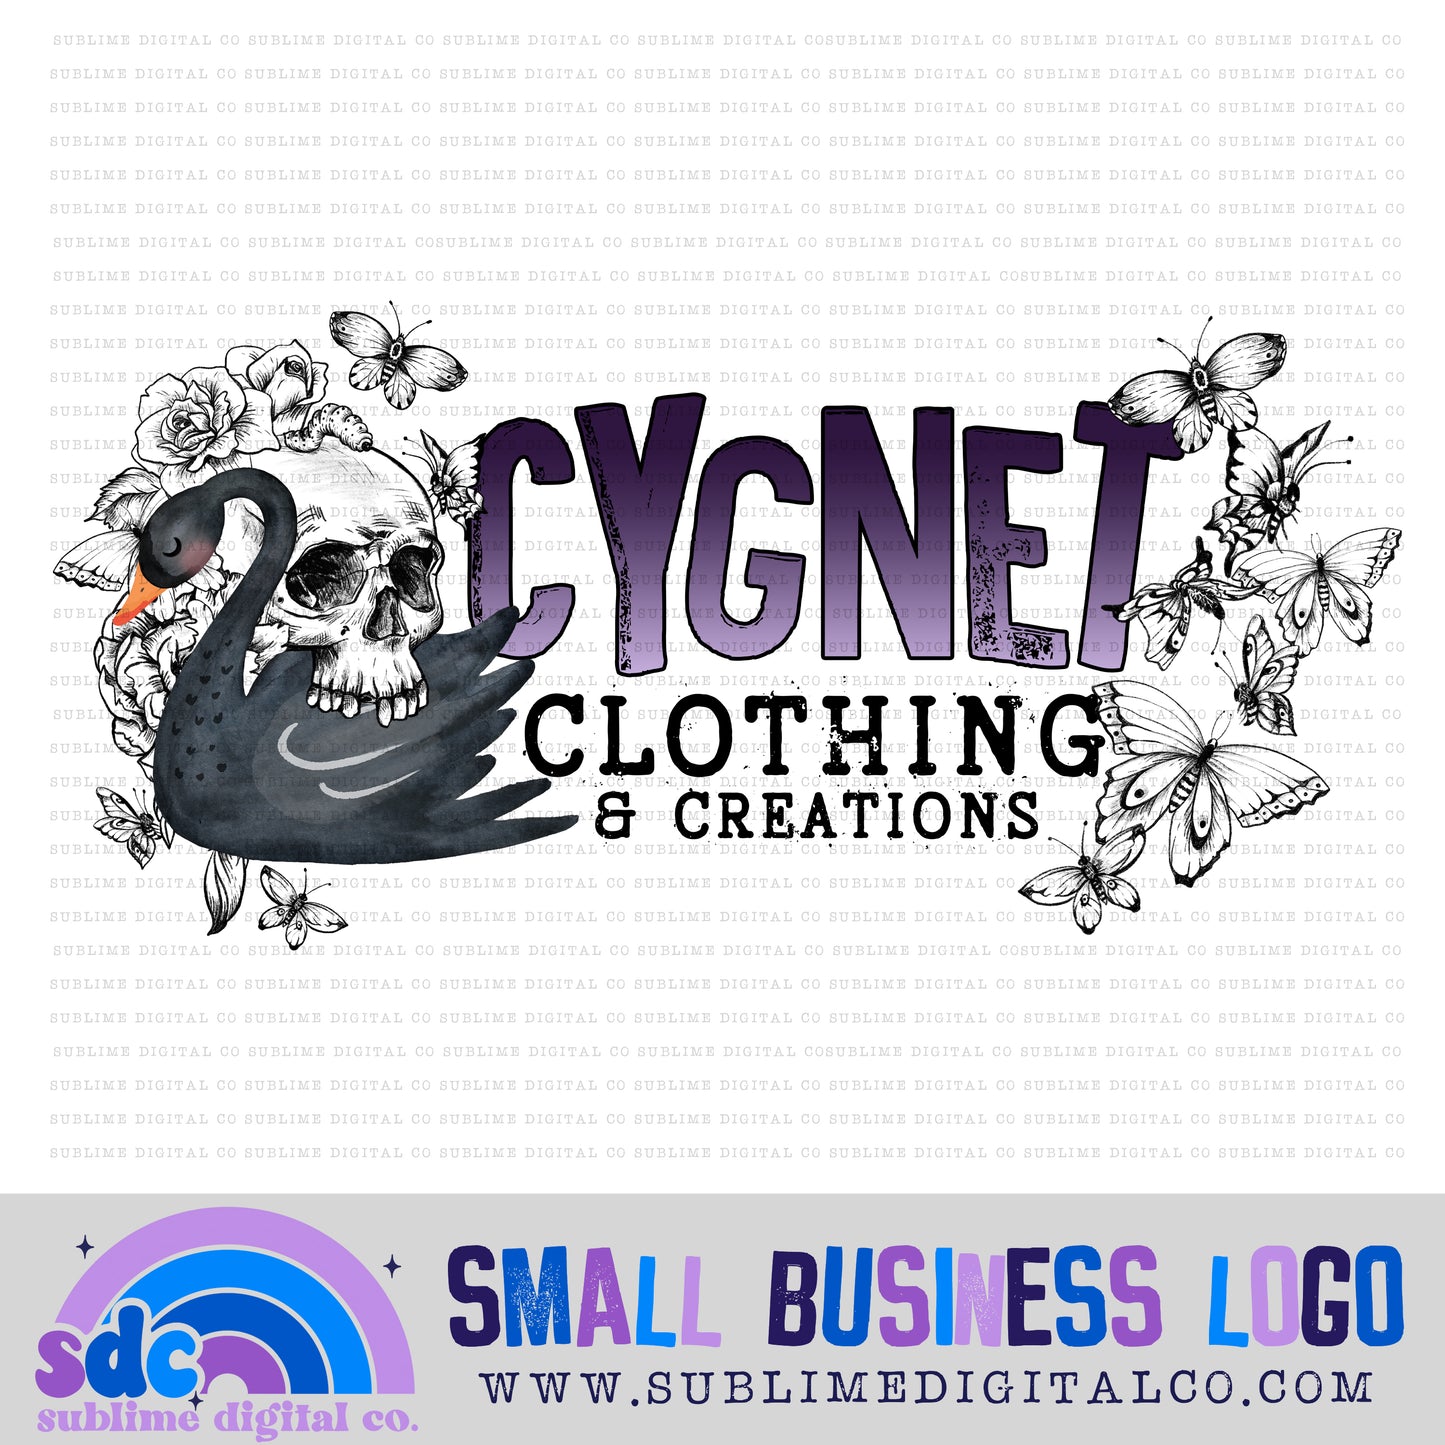 Small Business Logo • Business Branding • Custom Digital Designs